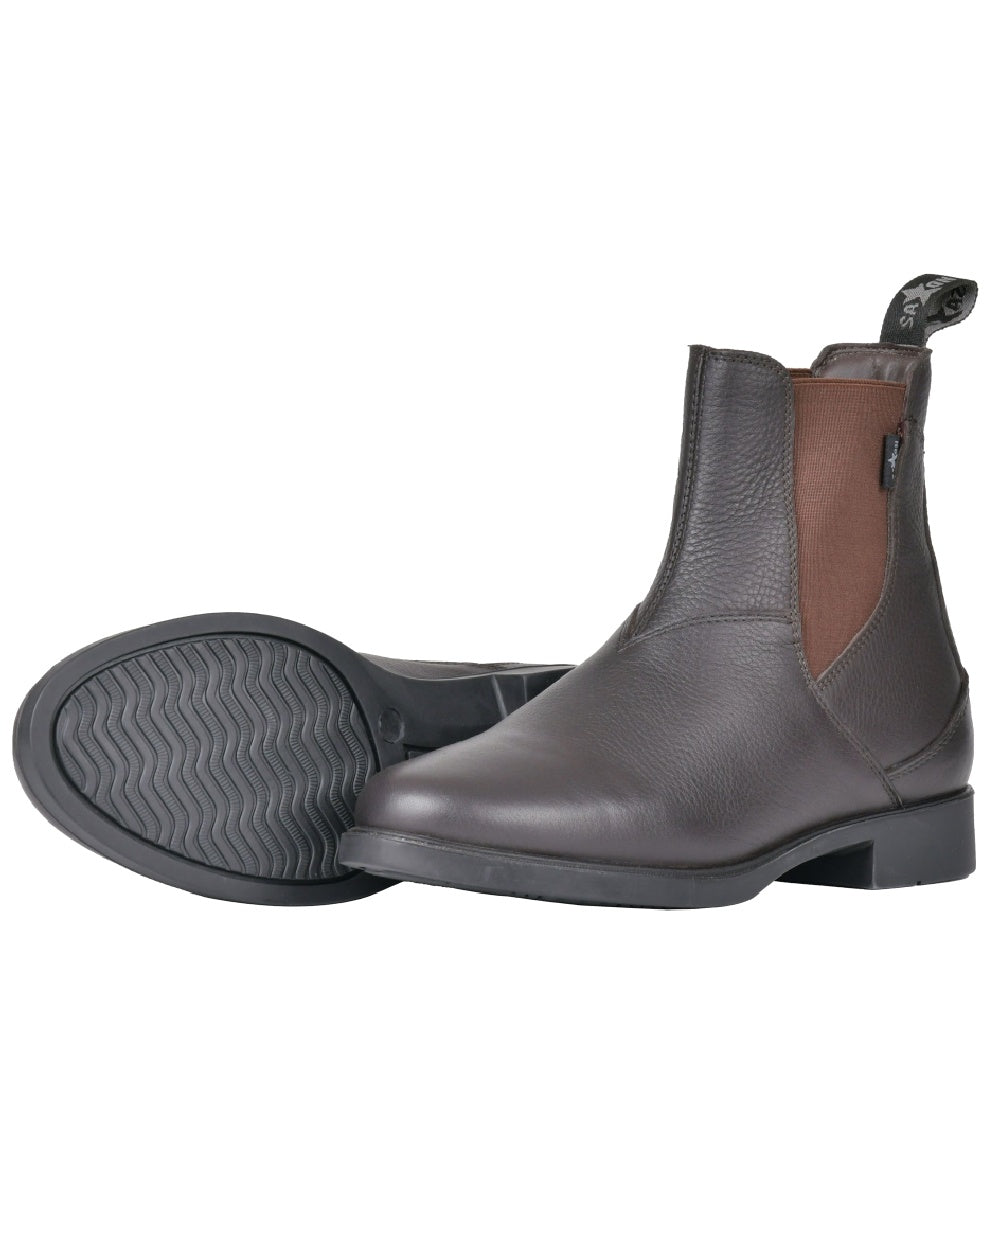 Saxon Allyn Jodhpur Boots in Brown 